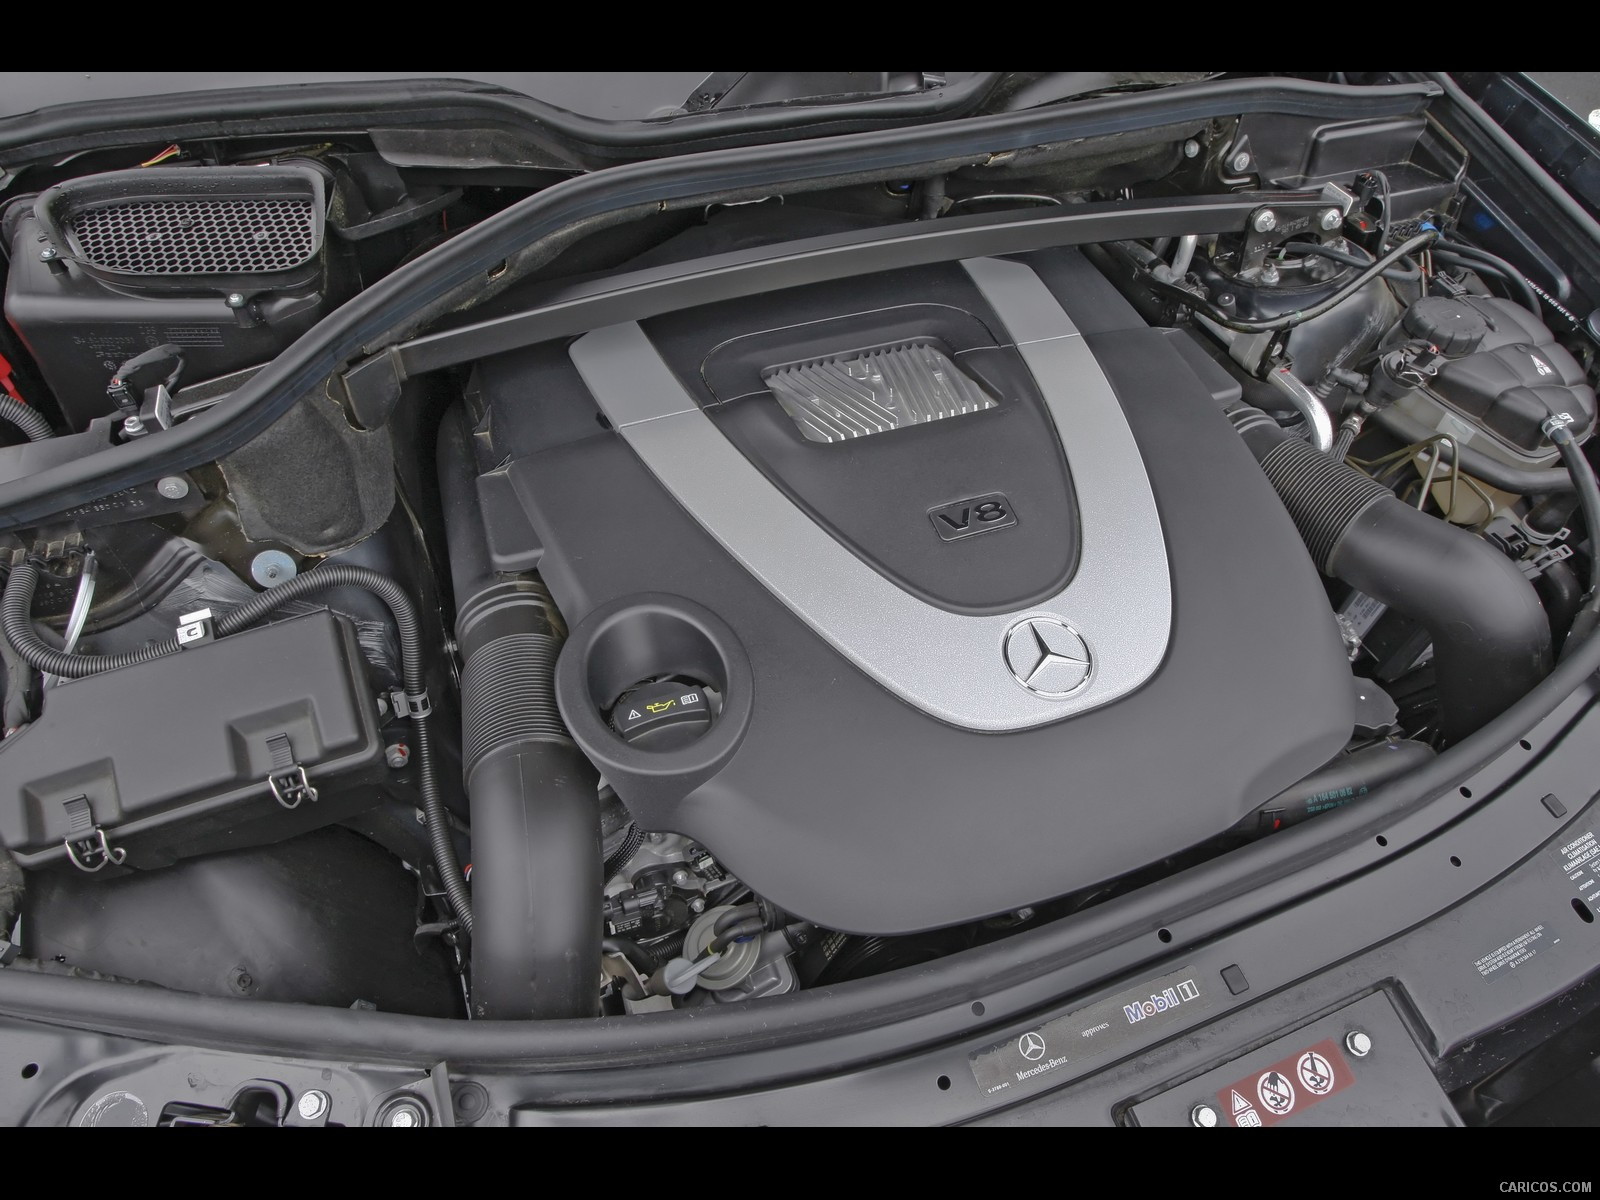 2010 Mercedes-Benz GL550 - Engine, #68 of 112